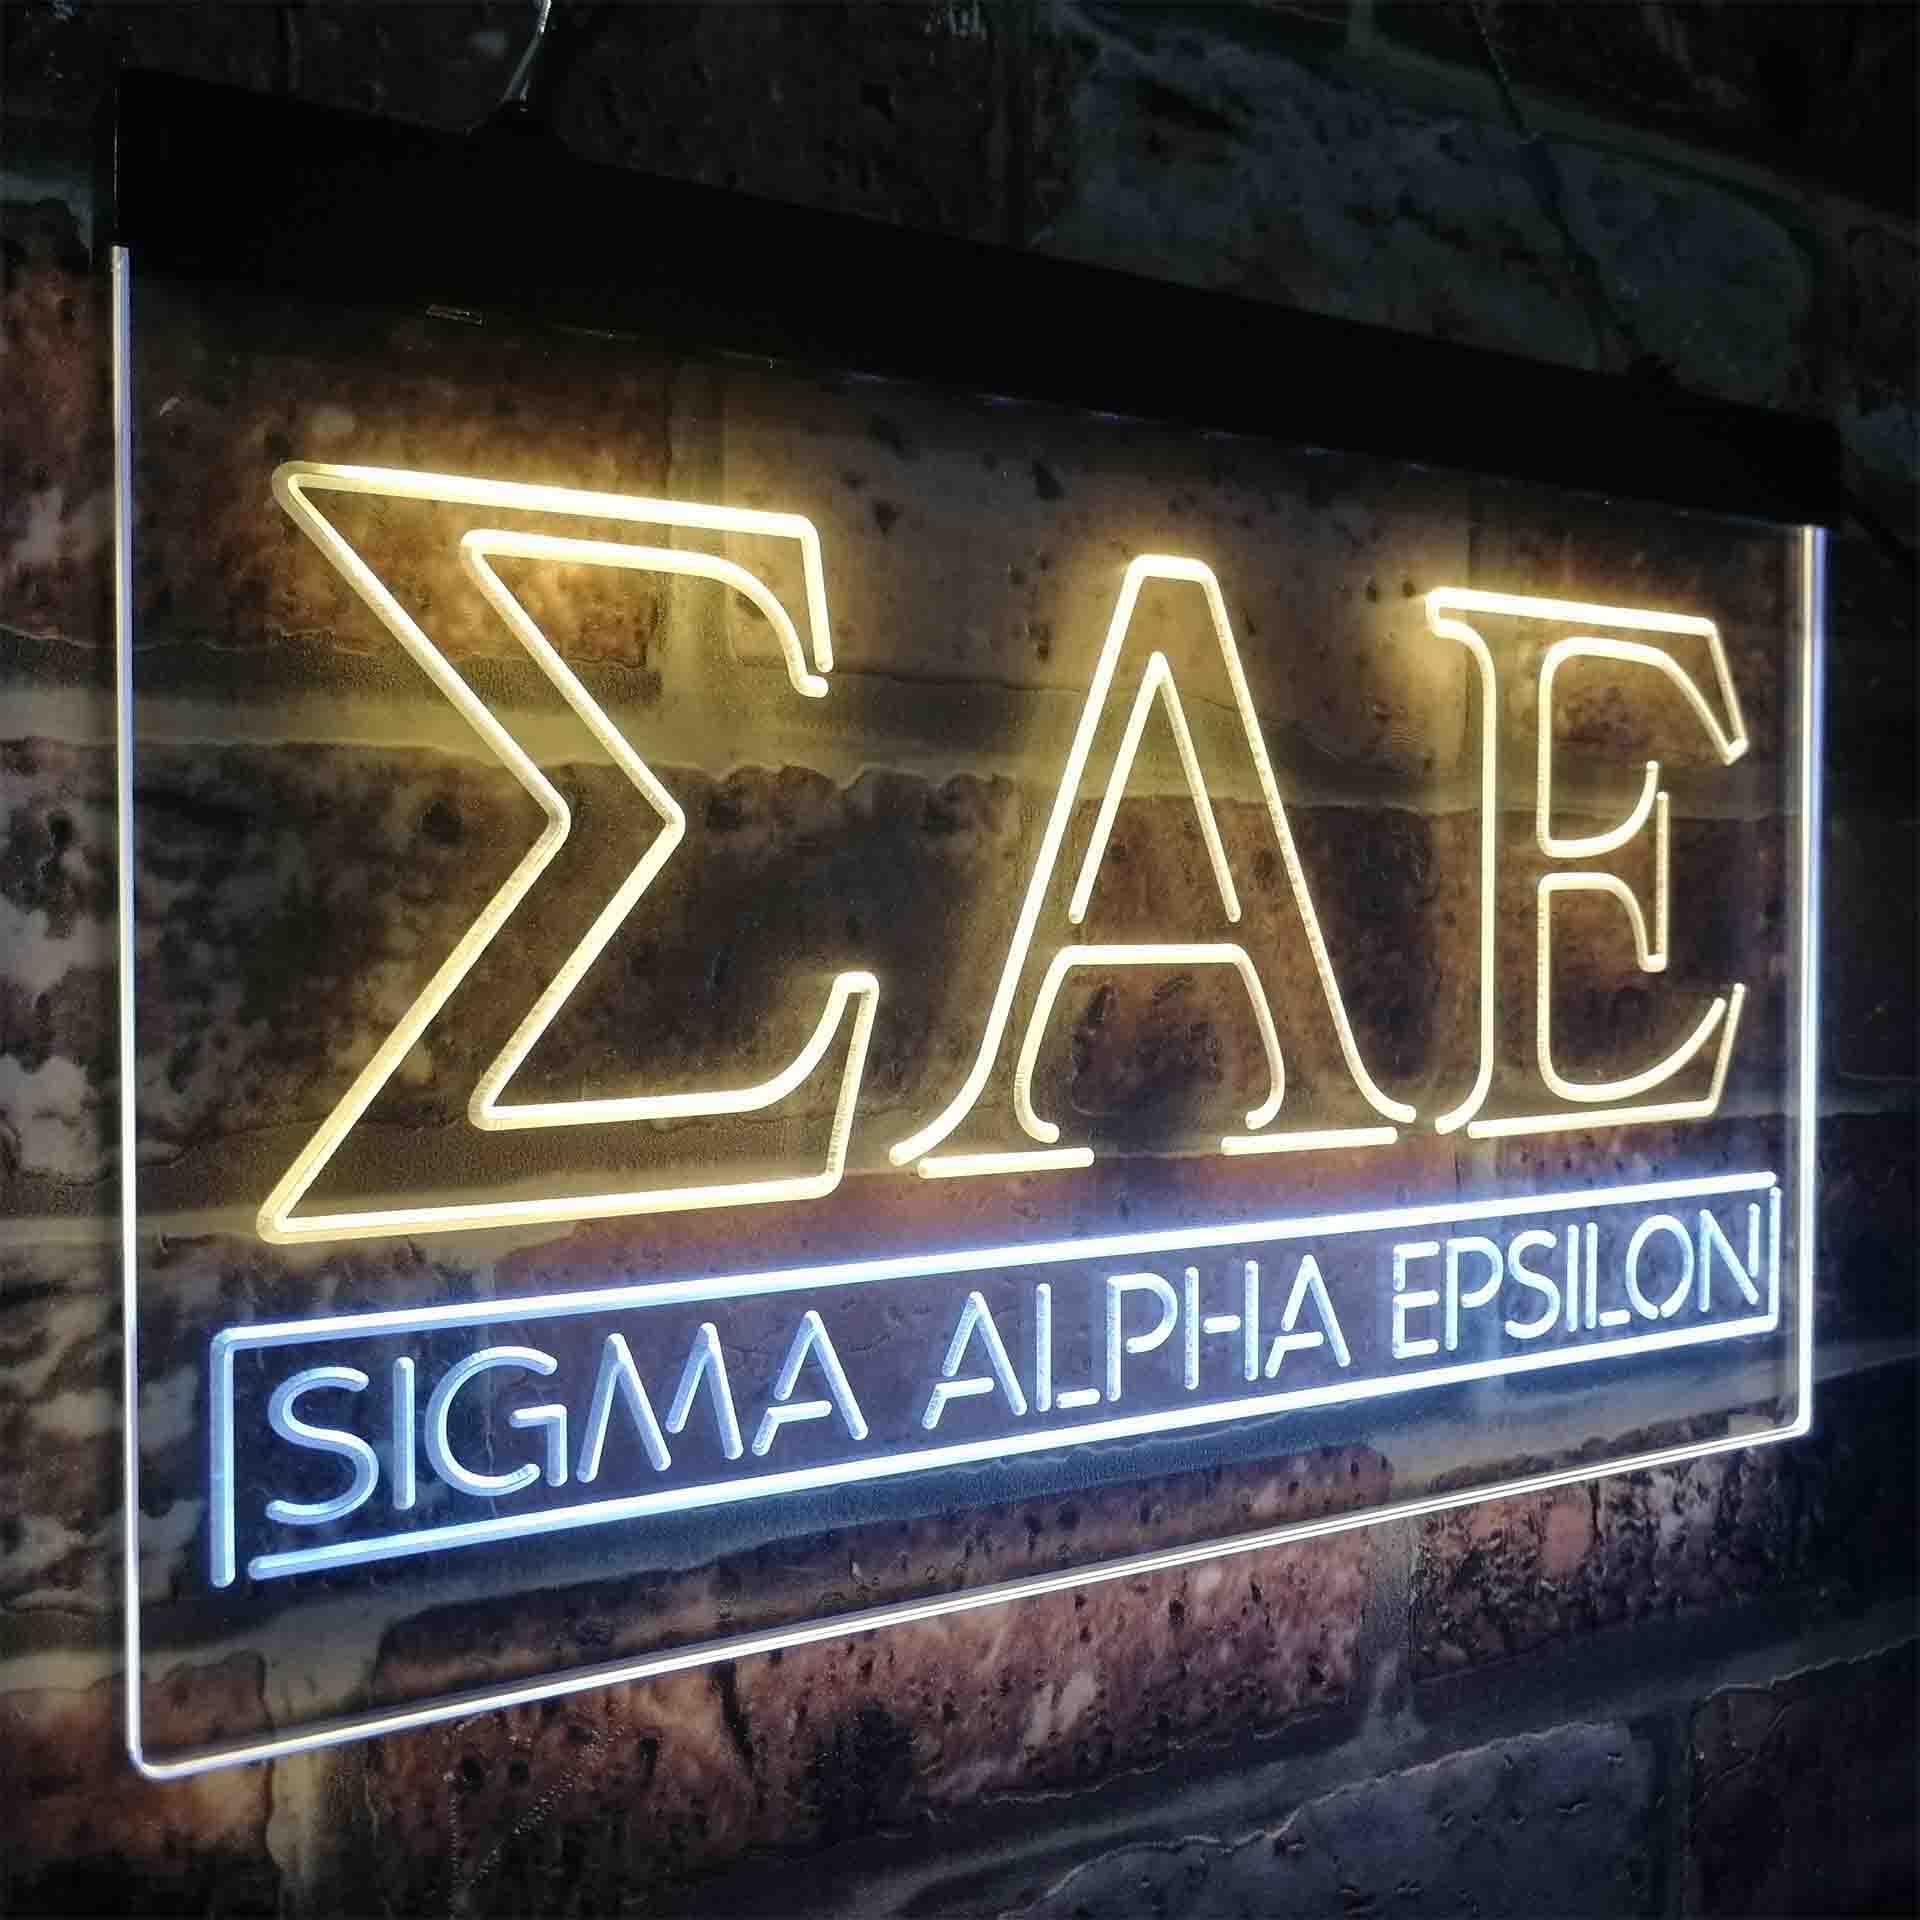 Sigma Alpha Epsilon Fraternity Greek Letter Organization Neon-Like LED Sign